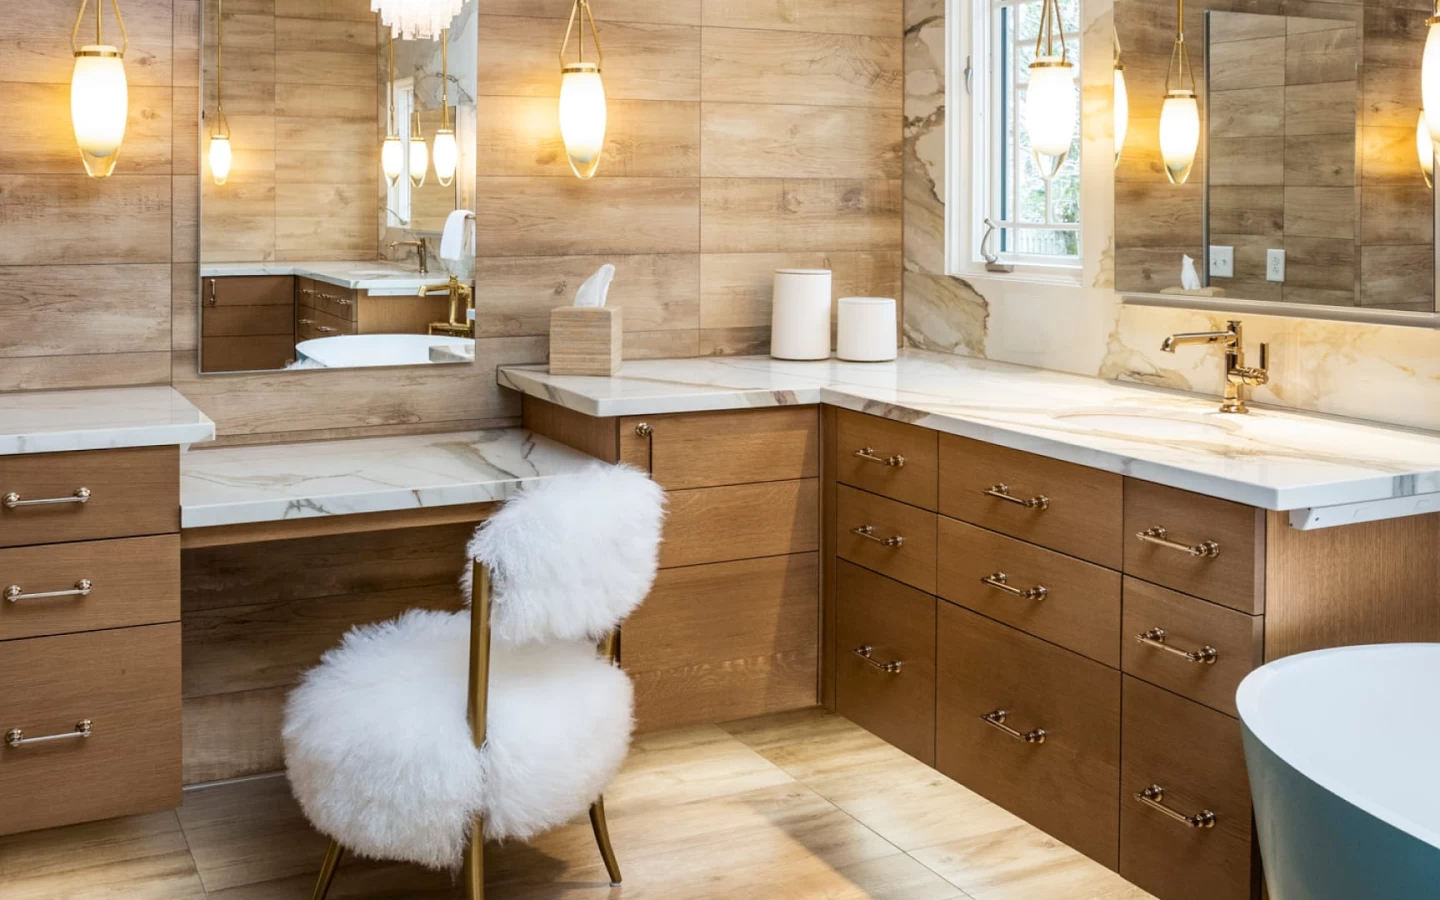 Bathroom vanity top with Atlas Plan Calacatta marble look - Project by Tbektu Design